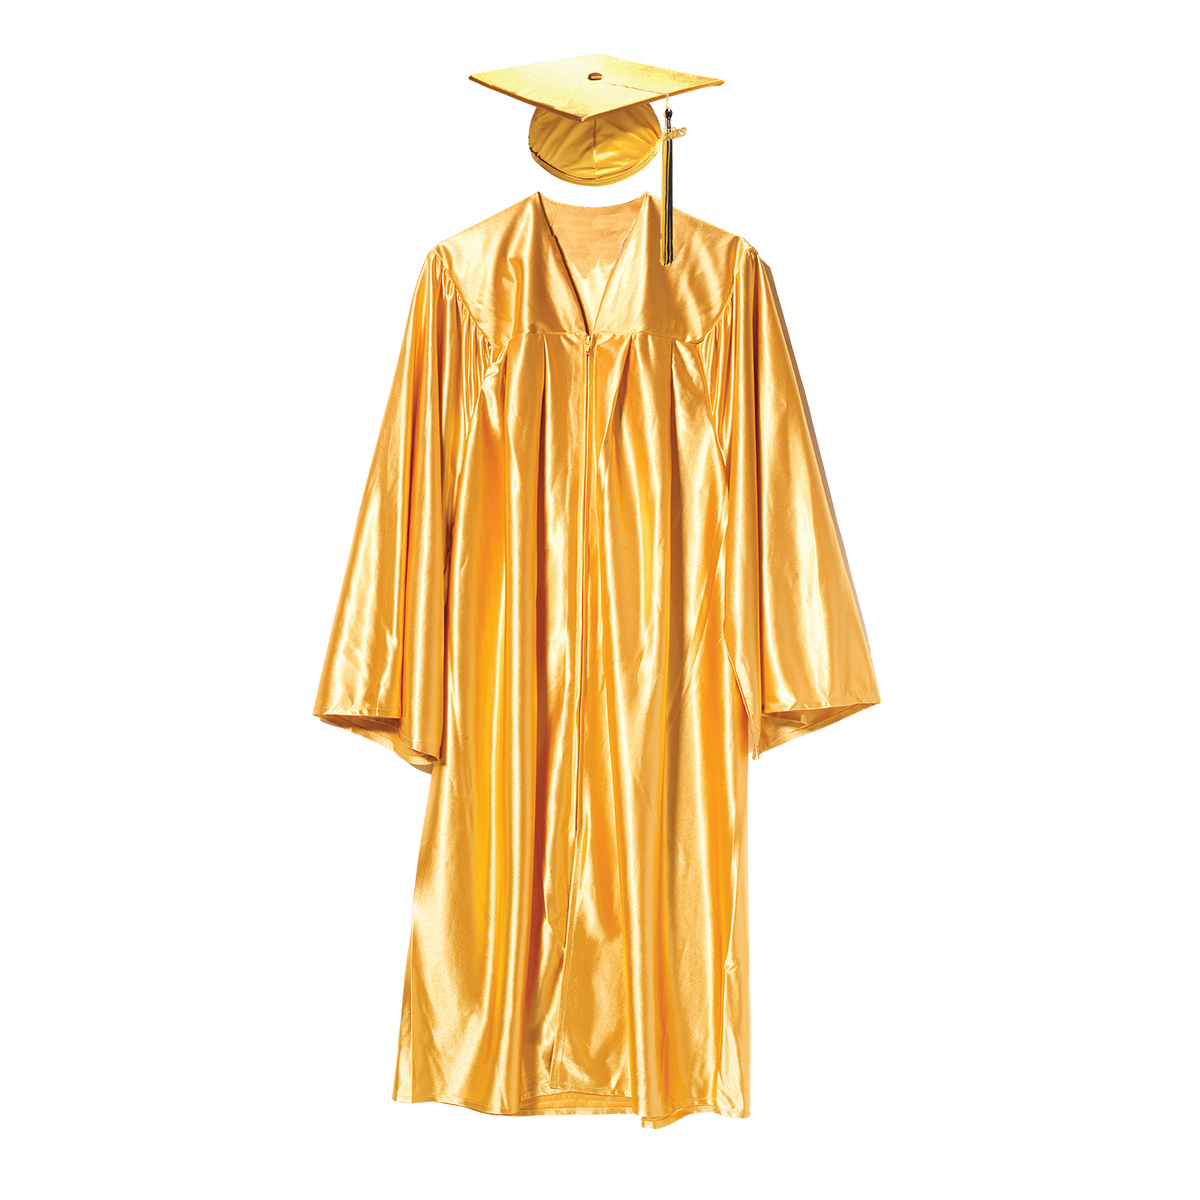 Standard Shiny Graduation Cap et robe assorti 2018 pampilles-taille plus 1 